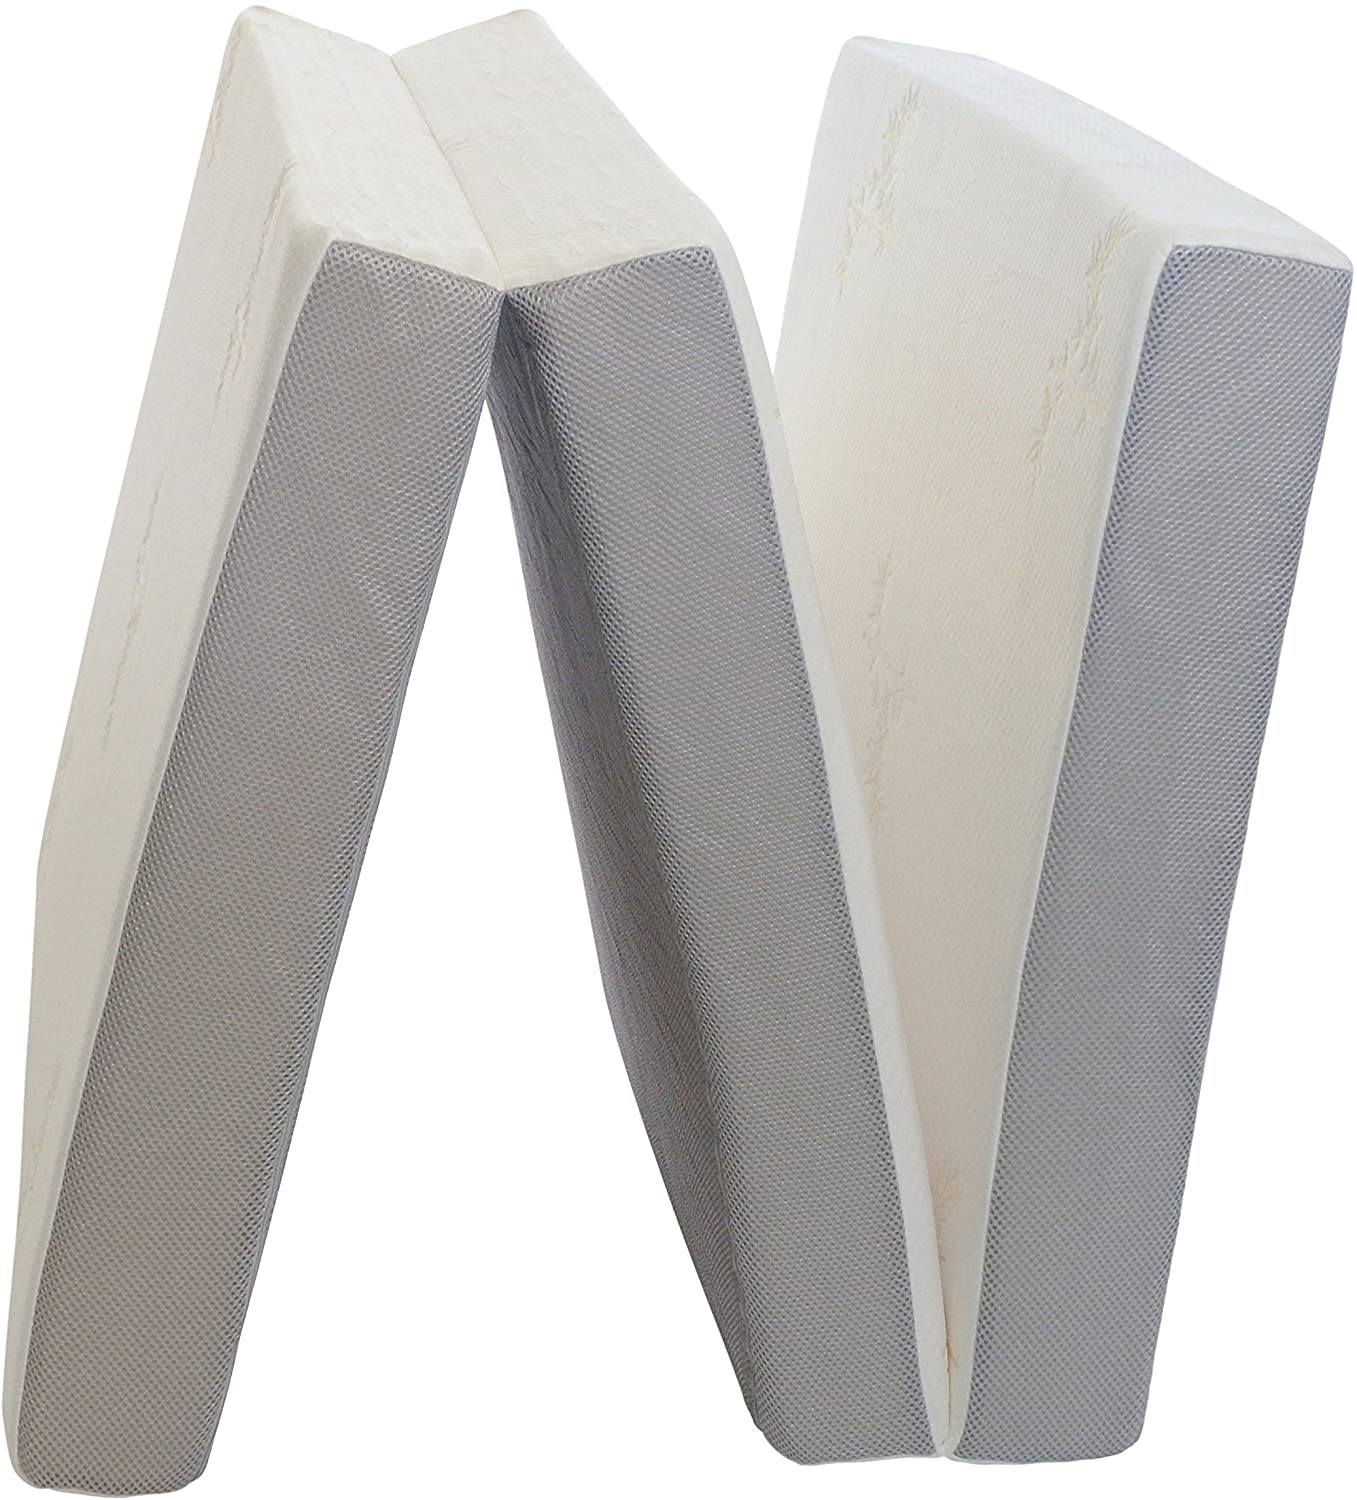 Milliard Tri 4 Inch Folding Mattress with Washable Cover Twin (75"x38"